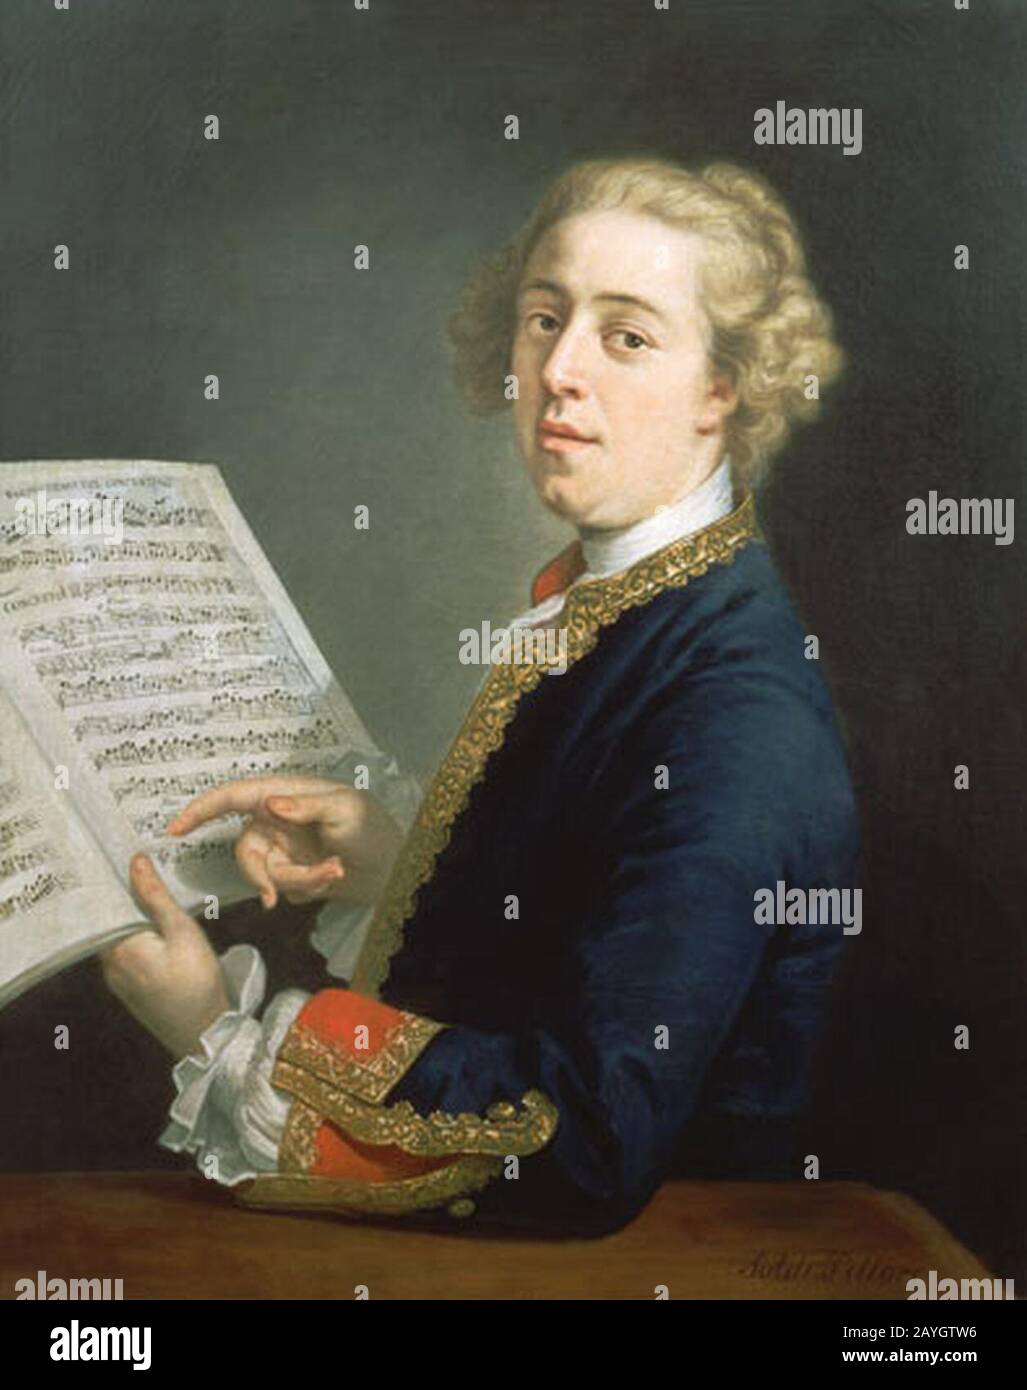 Francesco Saverio Geminiani (1687.12.5.-1762.9.17) Italian violinist composer music theorist. Stock Photo